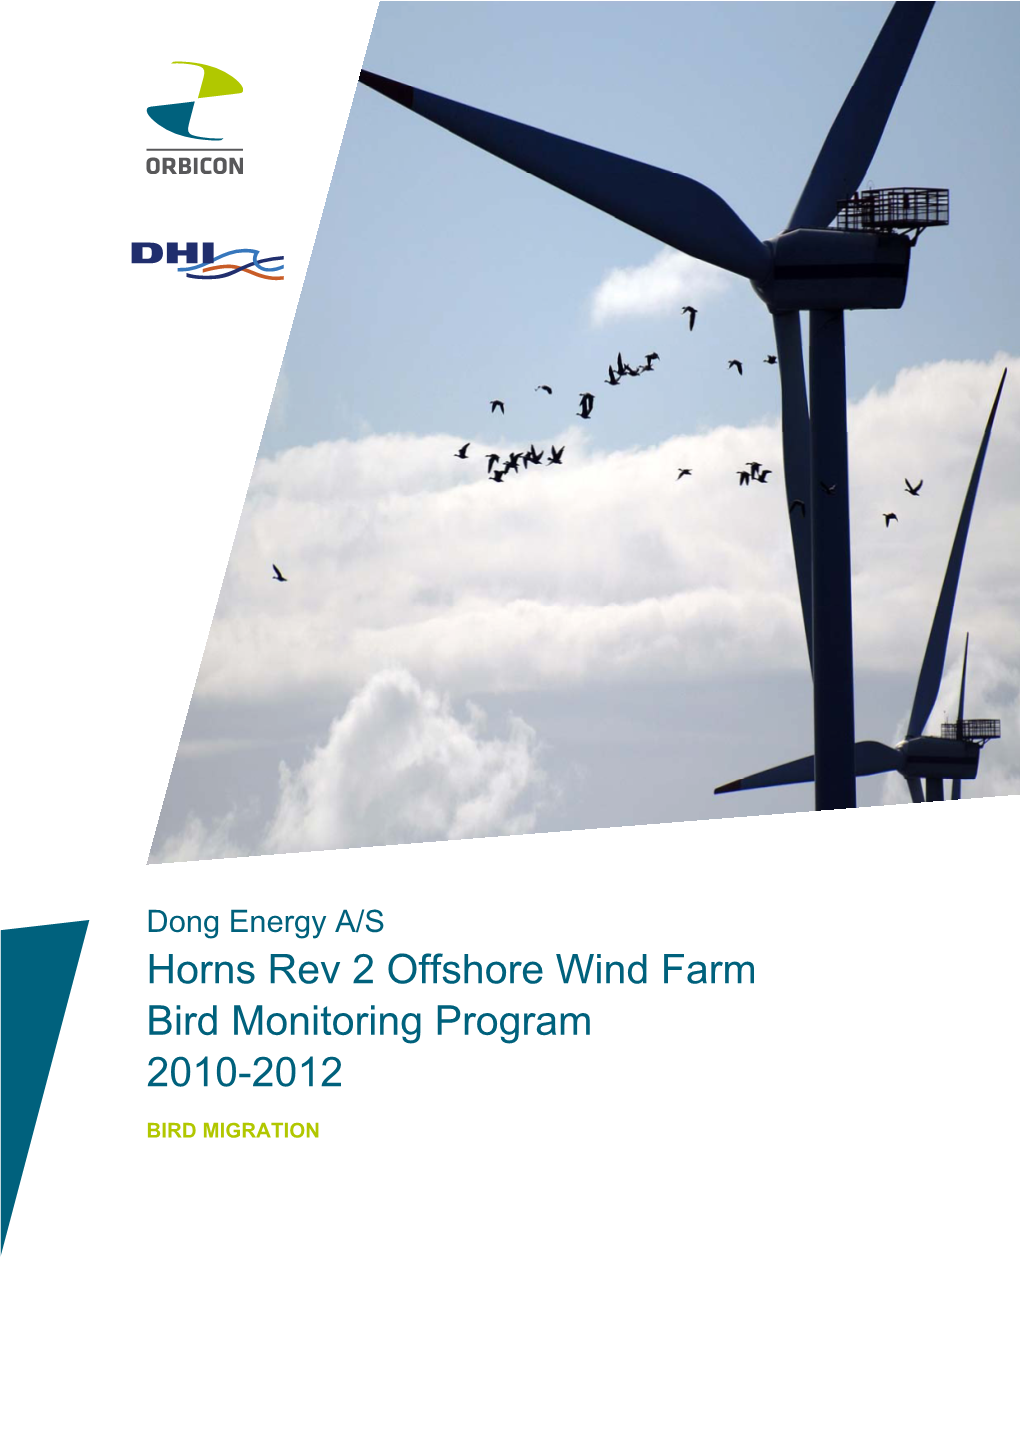 Horns Rev 2 Offshore Wind Farm Bird Monitoring Program 2010-2012